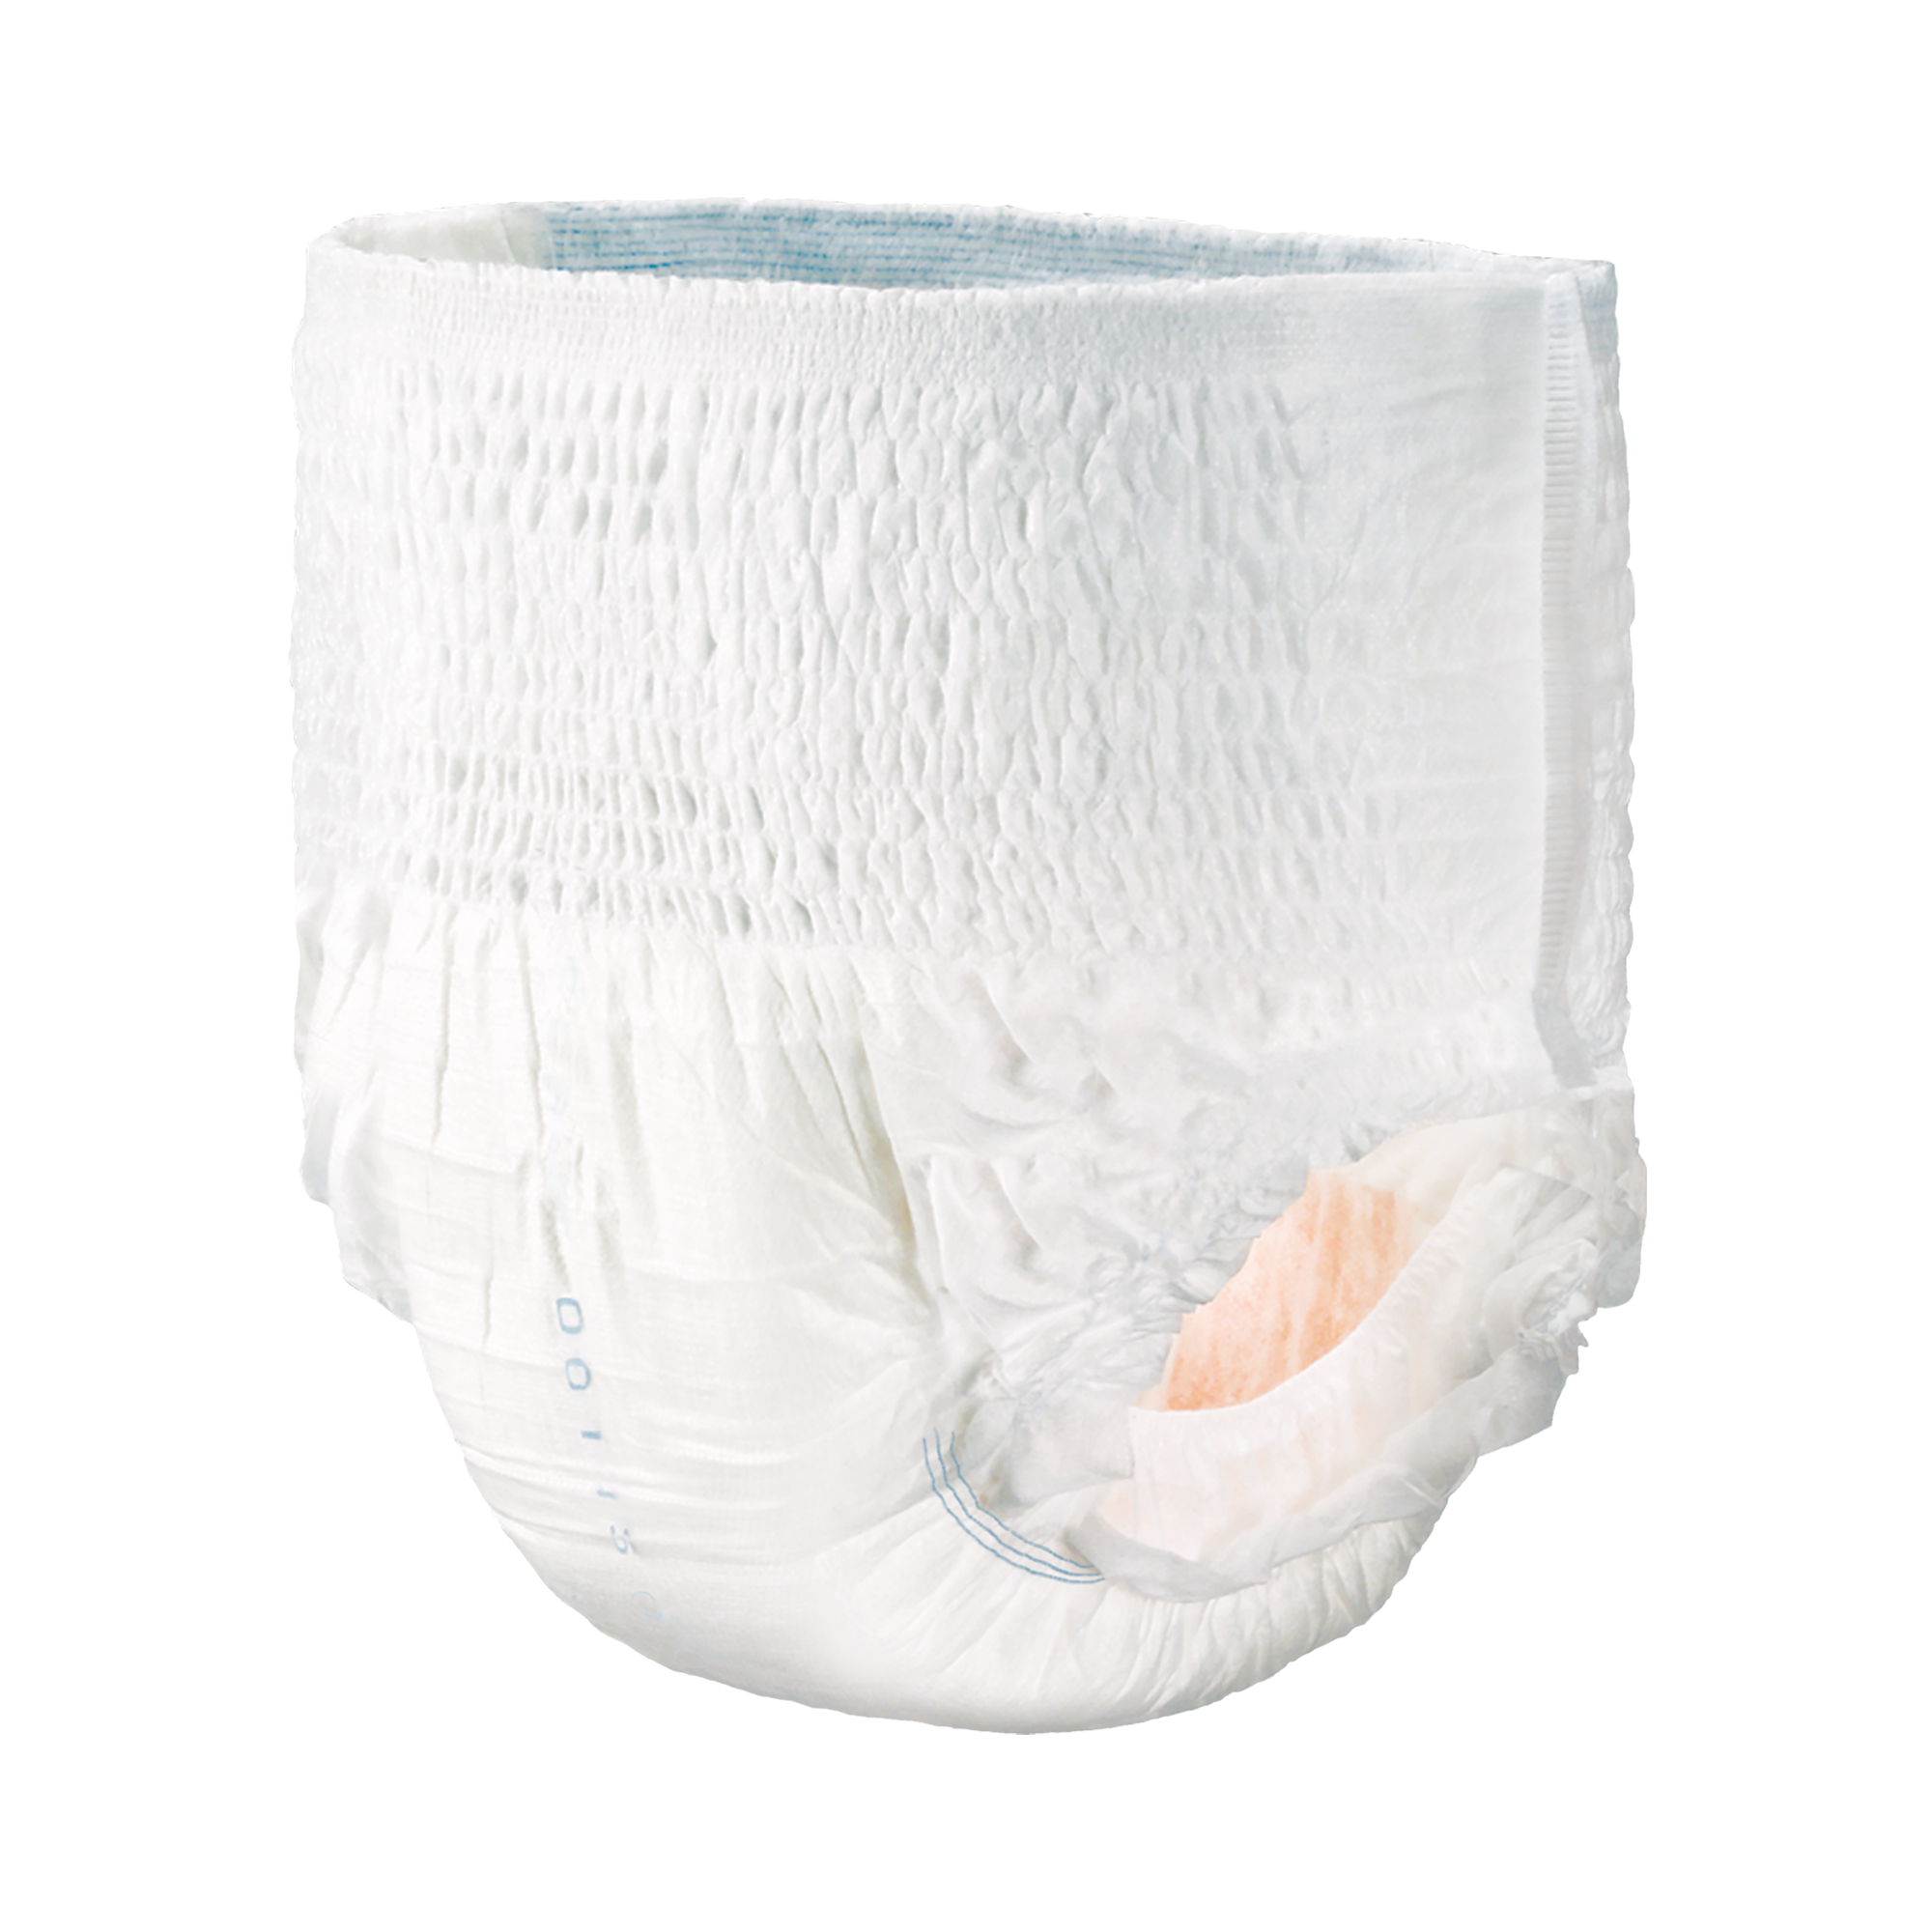 Buy Adult PullUps Diaper Online at Best Price